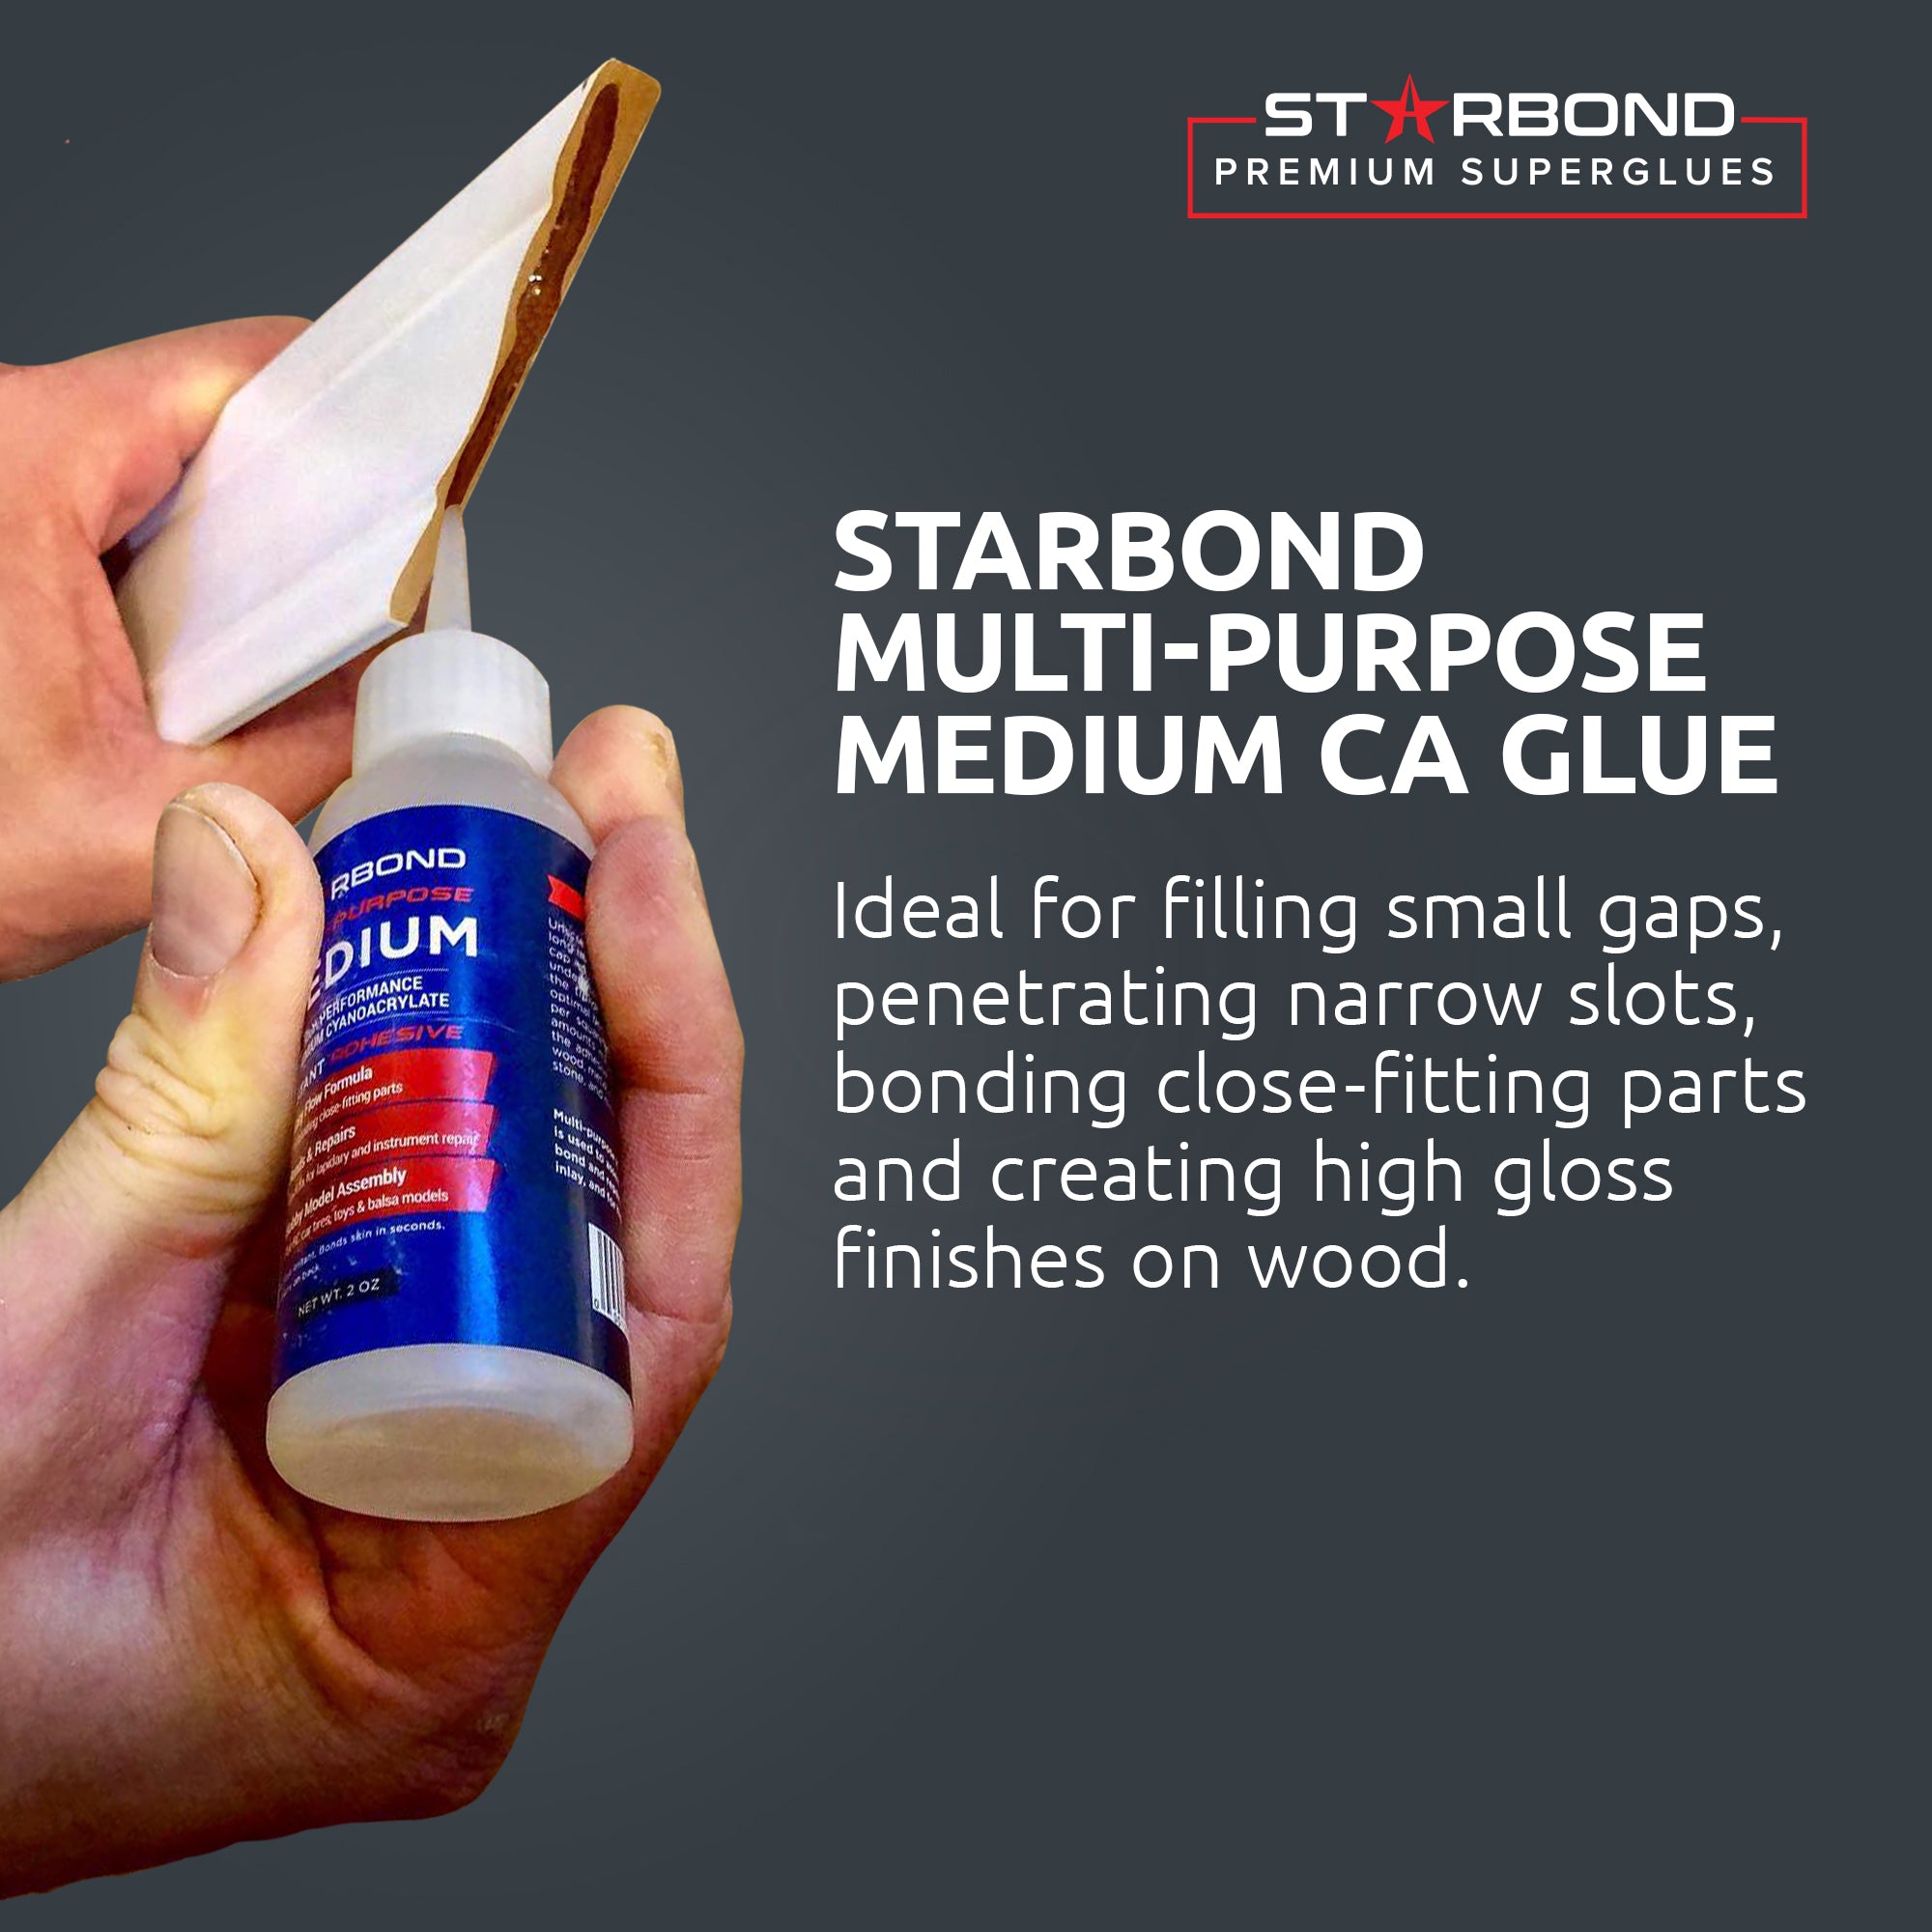 STARBOND 4 oz. Medium CA Glue with 8 oz. Pump Accelerator Bundle - Super  Craft Glue for Wood, Plastic, Metal, Leather, Ceramic - Cyanoacrylate Glue